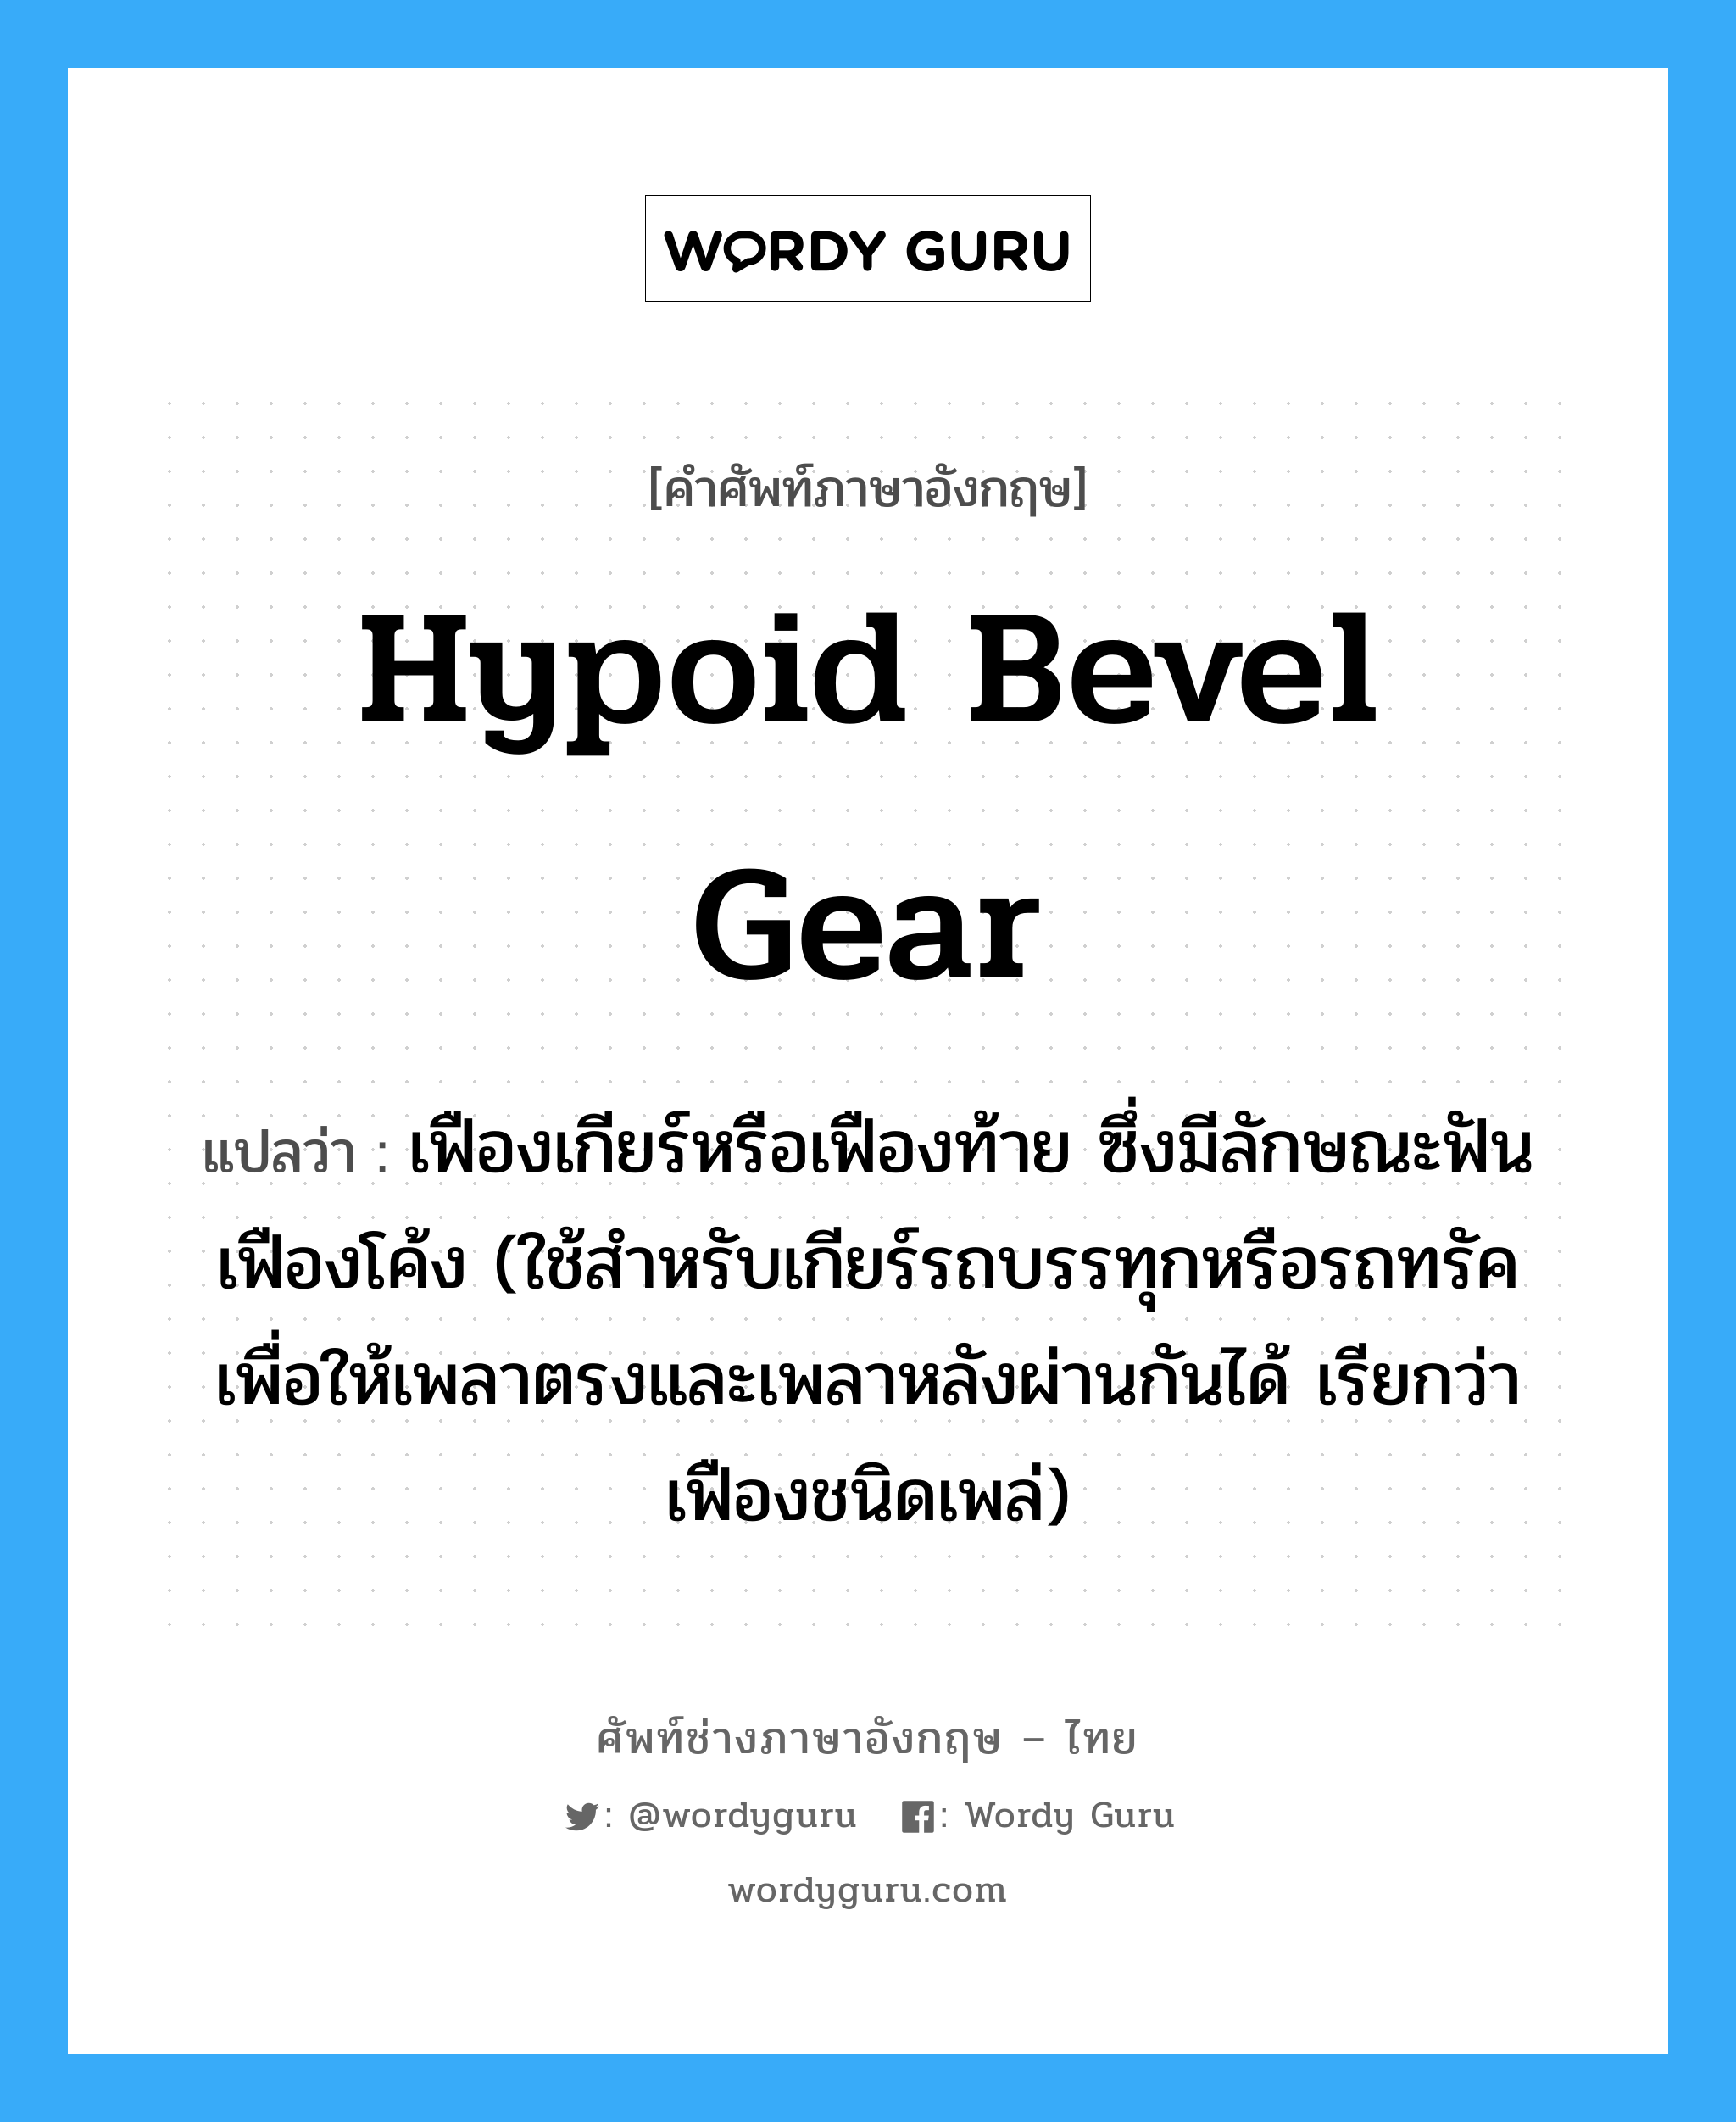 hypoid bevel gear แปลว่า?, คำศัพท์ช่างภาษาอังกฤษ - ไทย hypoid bevel gear คำศัพท์ภาษาอังกฤษ hypoid bevel gear แปลว่า เฟืองเกียร์หรือเฟืองท้าย ซึ่งมีลักษณะฟันเฟืองโค้ง (ใช้สำหรับเกียร์รถบรรทุกหรือรถทรัค เพื่อให้เพลาตรงและเพลาหลังผ่านกันได้ เรียกว่า เฟืองชนิดเพล่)